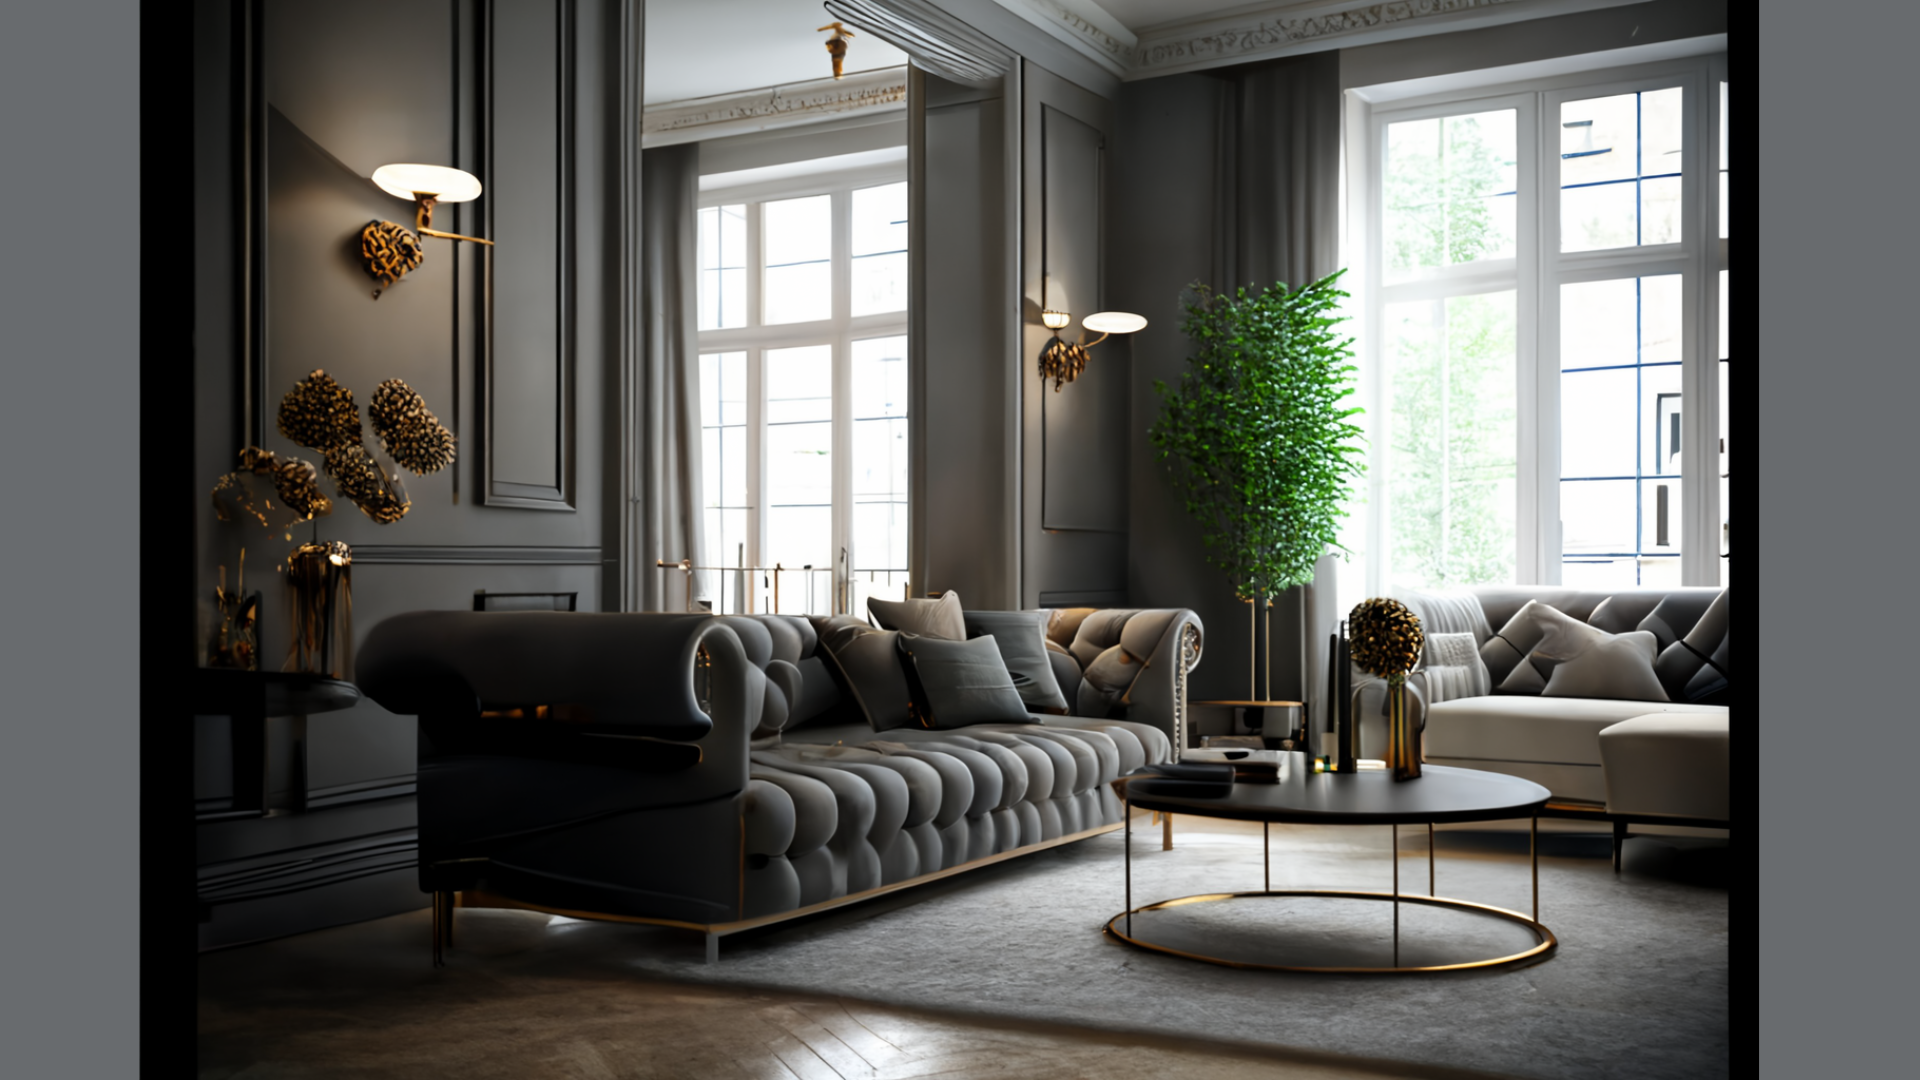 14x14-Living-Room-Luxury-Interior-Design - Smartscale House Design